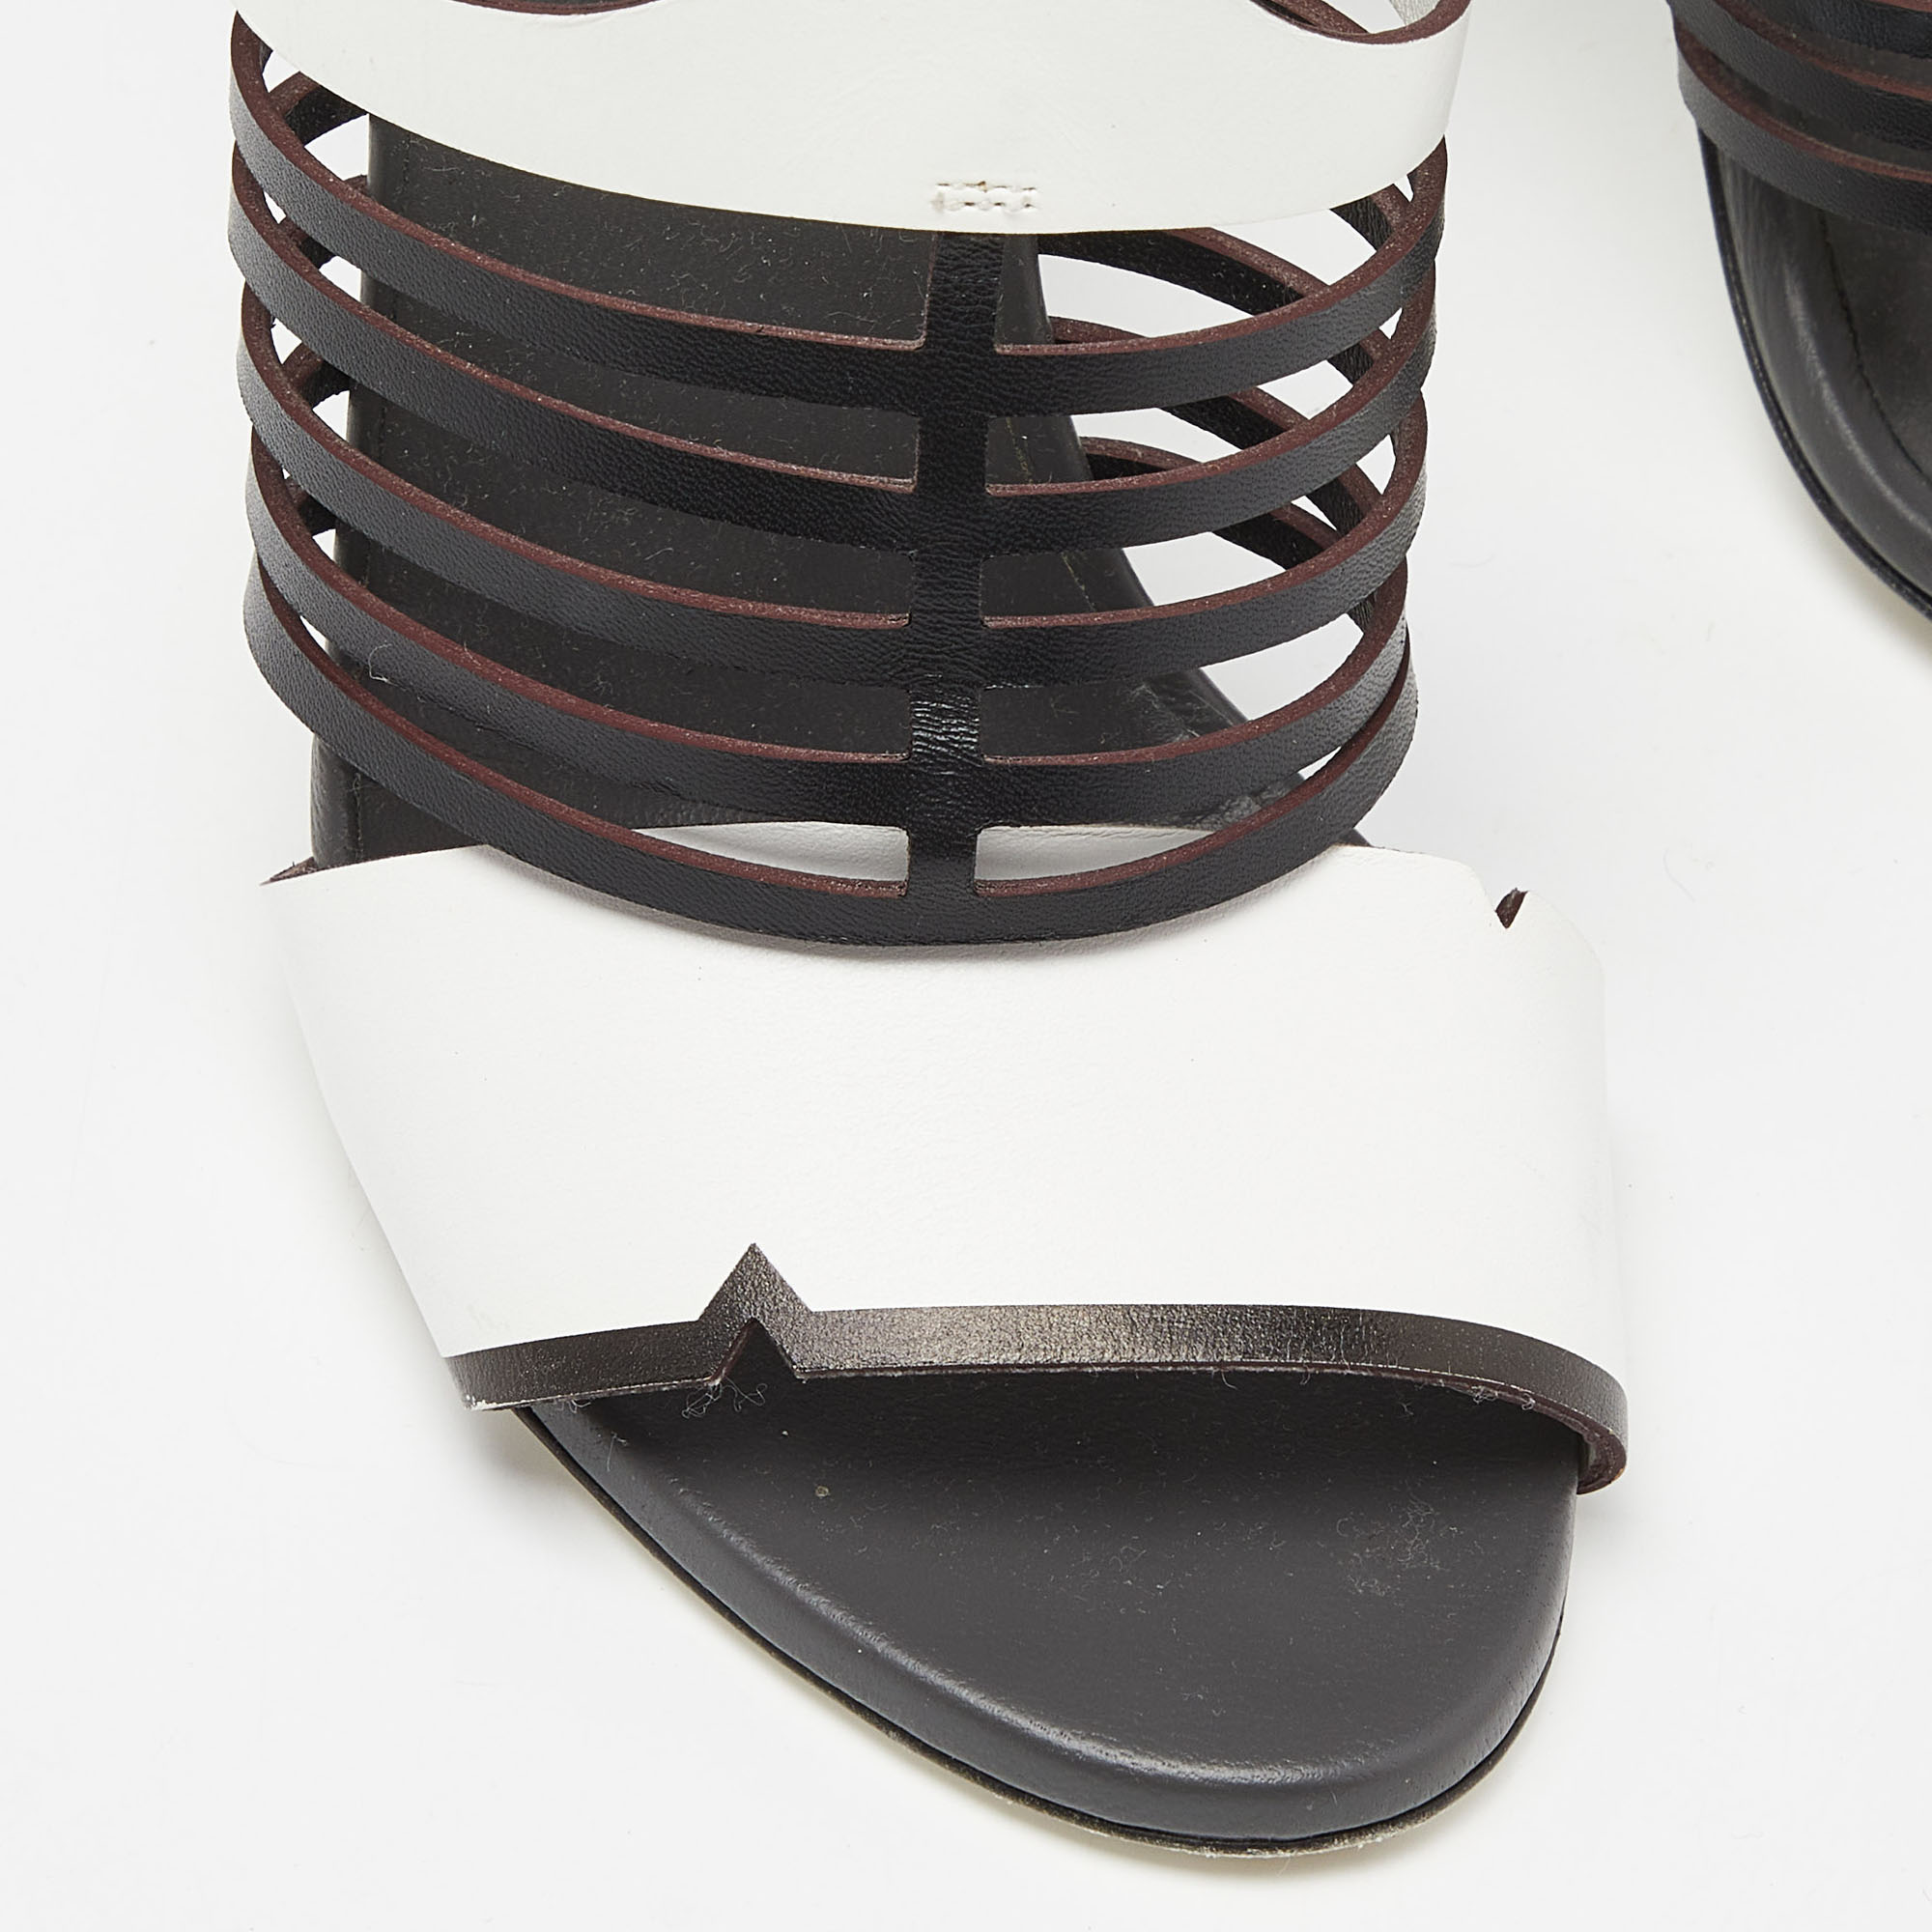 Fendi Tricolor Leather Strappy Sandals Size 36